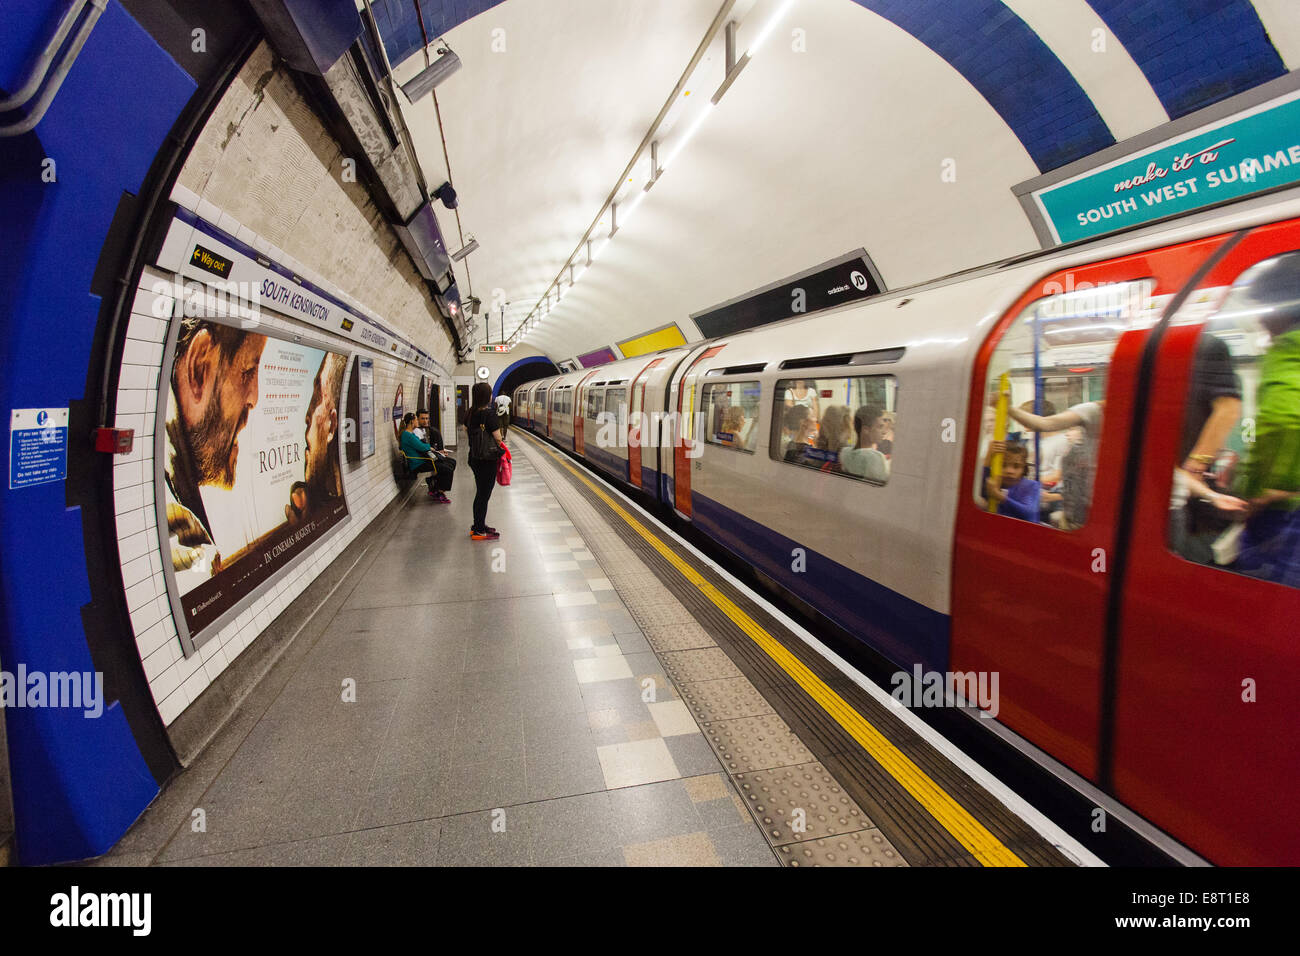 South Kensington underground train, London, England, United Kingdom. Stock Photo